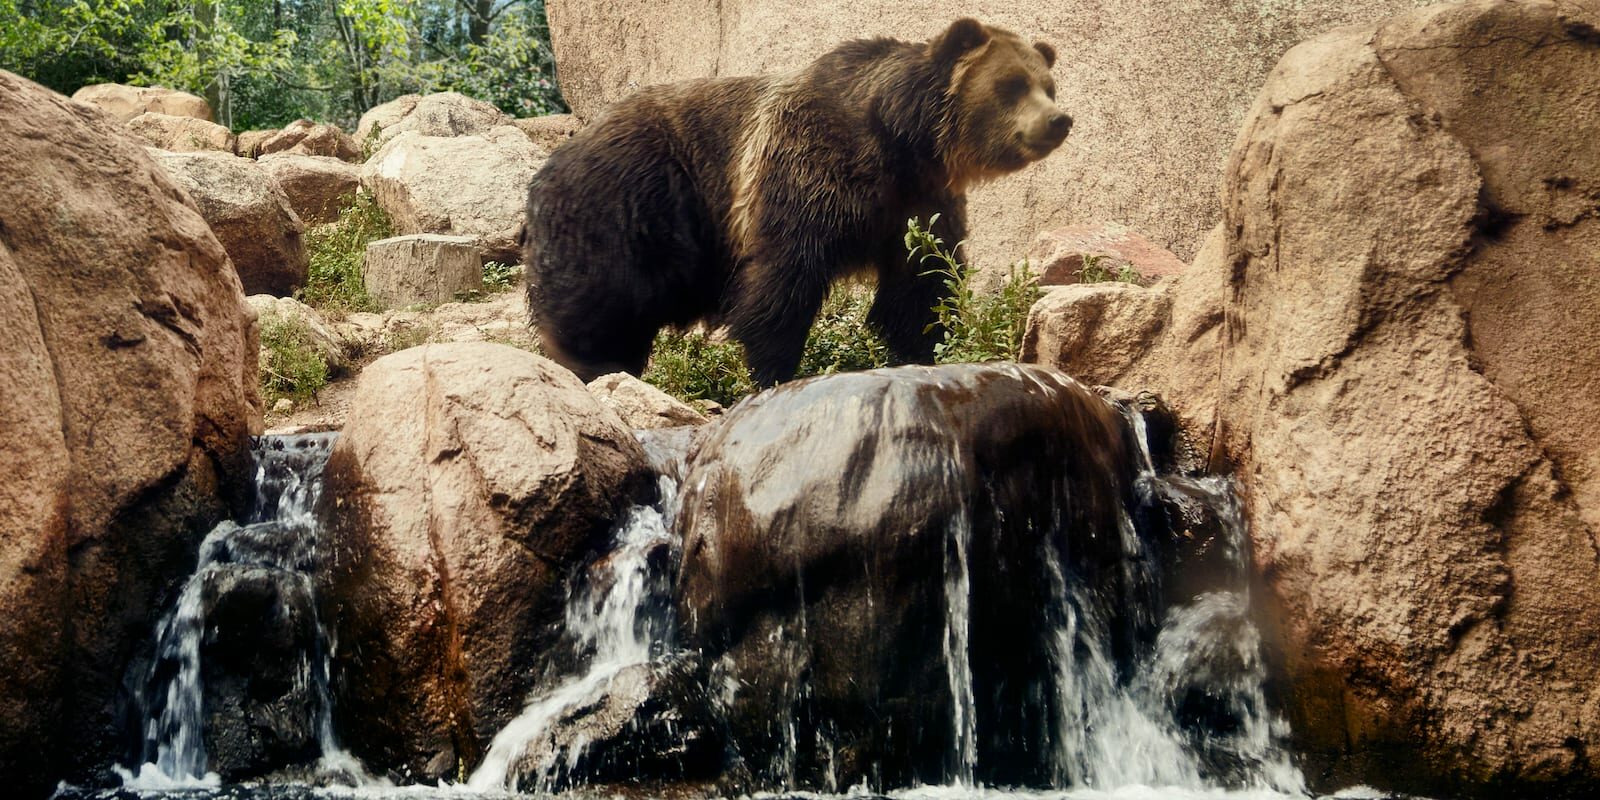 grizzly-bear-colorado-springs-cheyenne-mountain-zoo-1600x800-1-1600x800.jpg